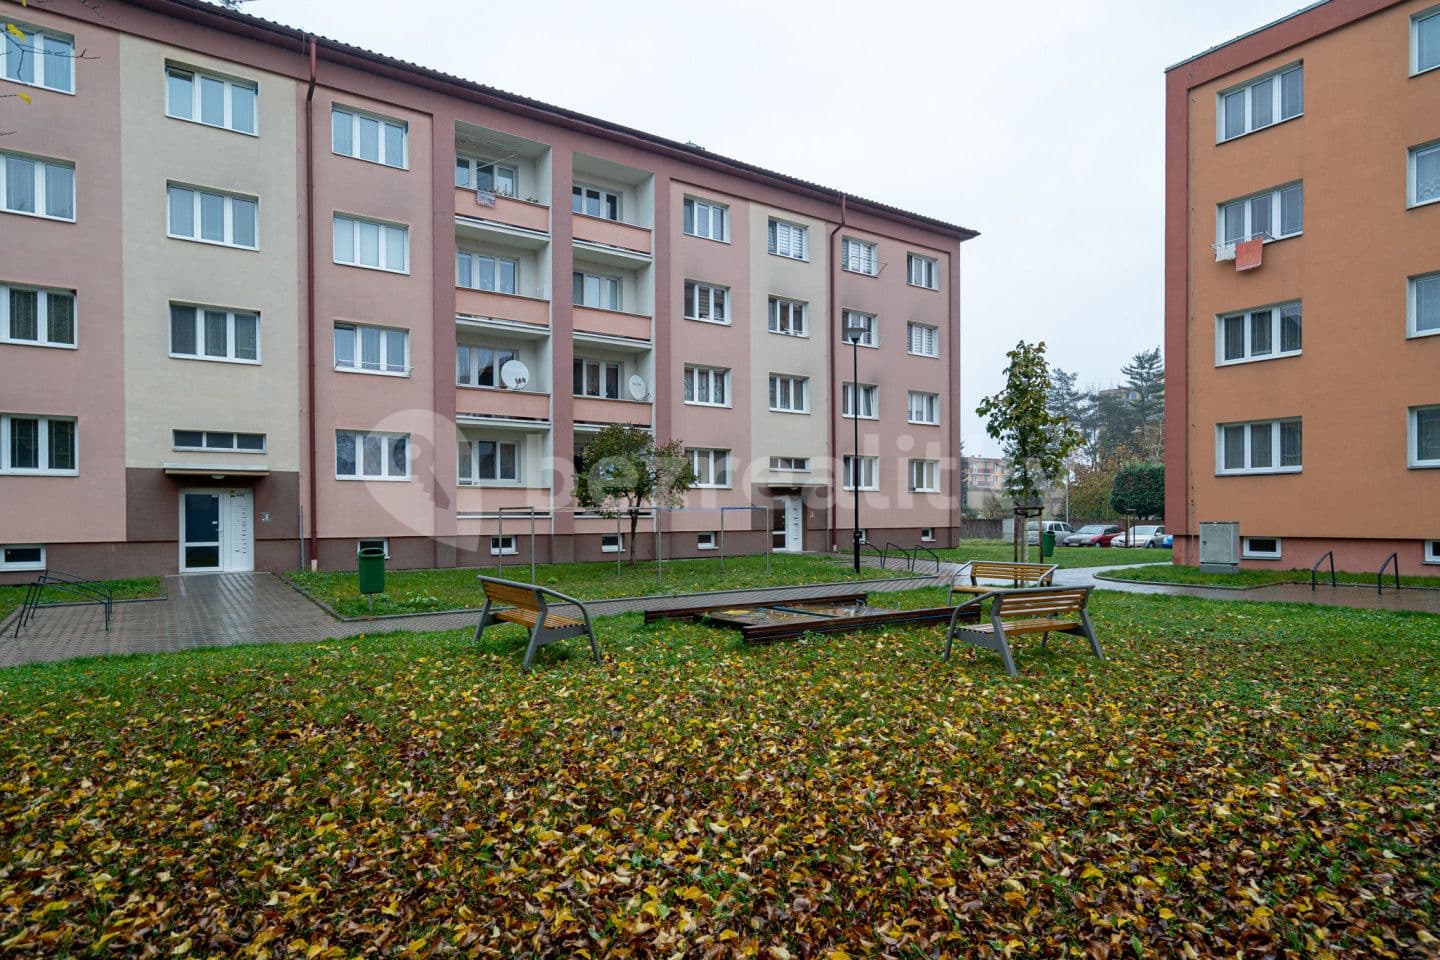 2 bedroom flat for sale, 52 m², Novosady, Litovel, Olomoucký Region